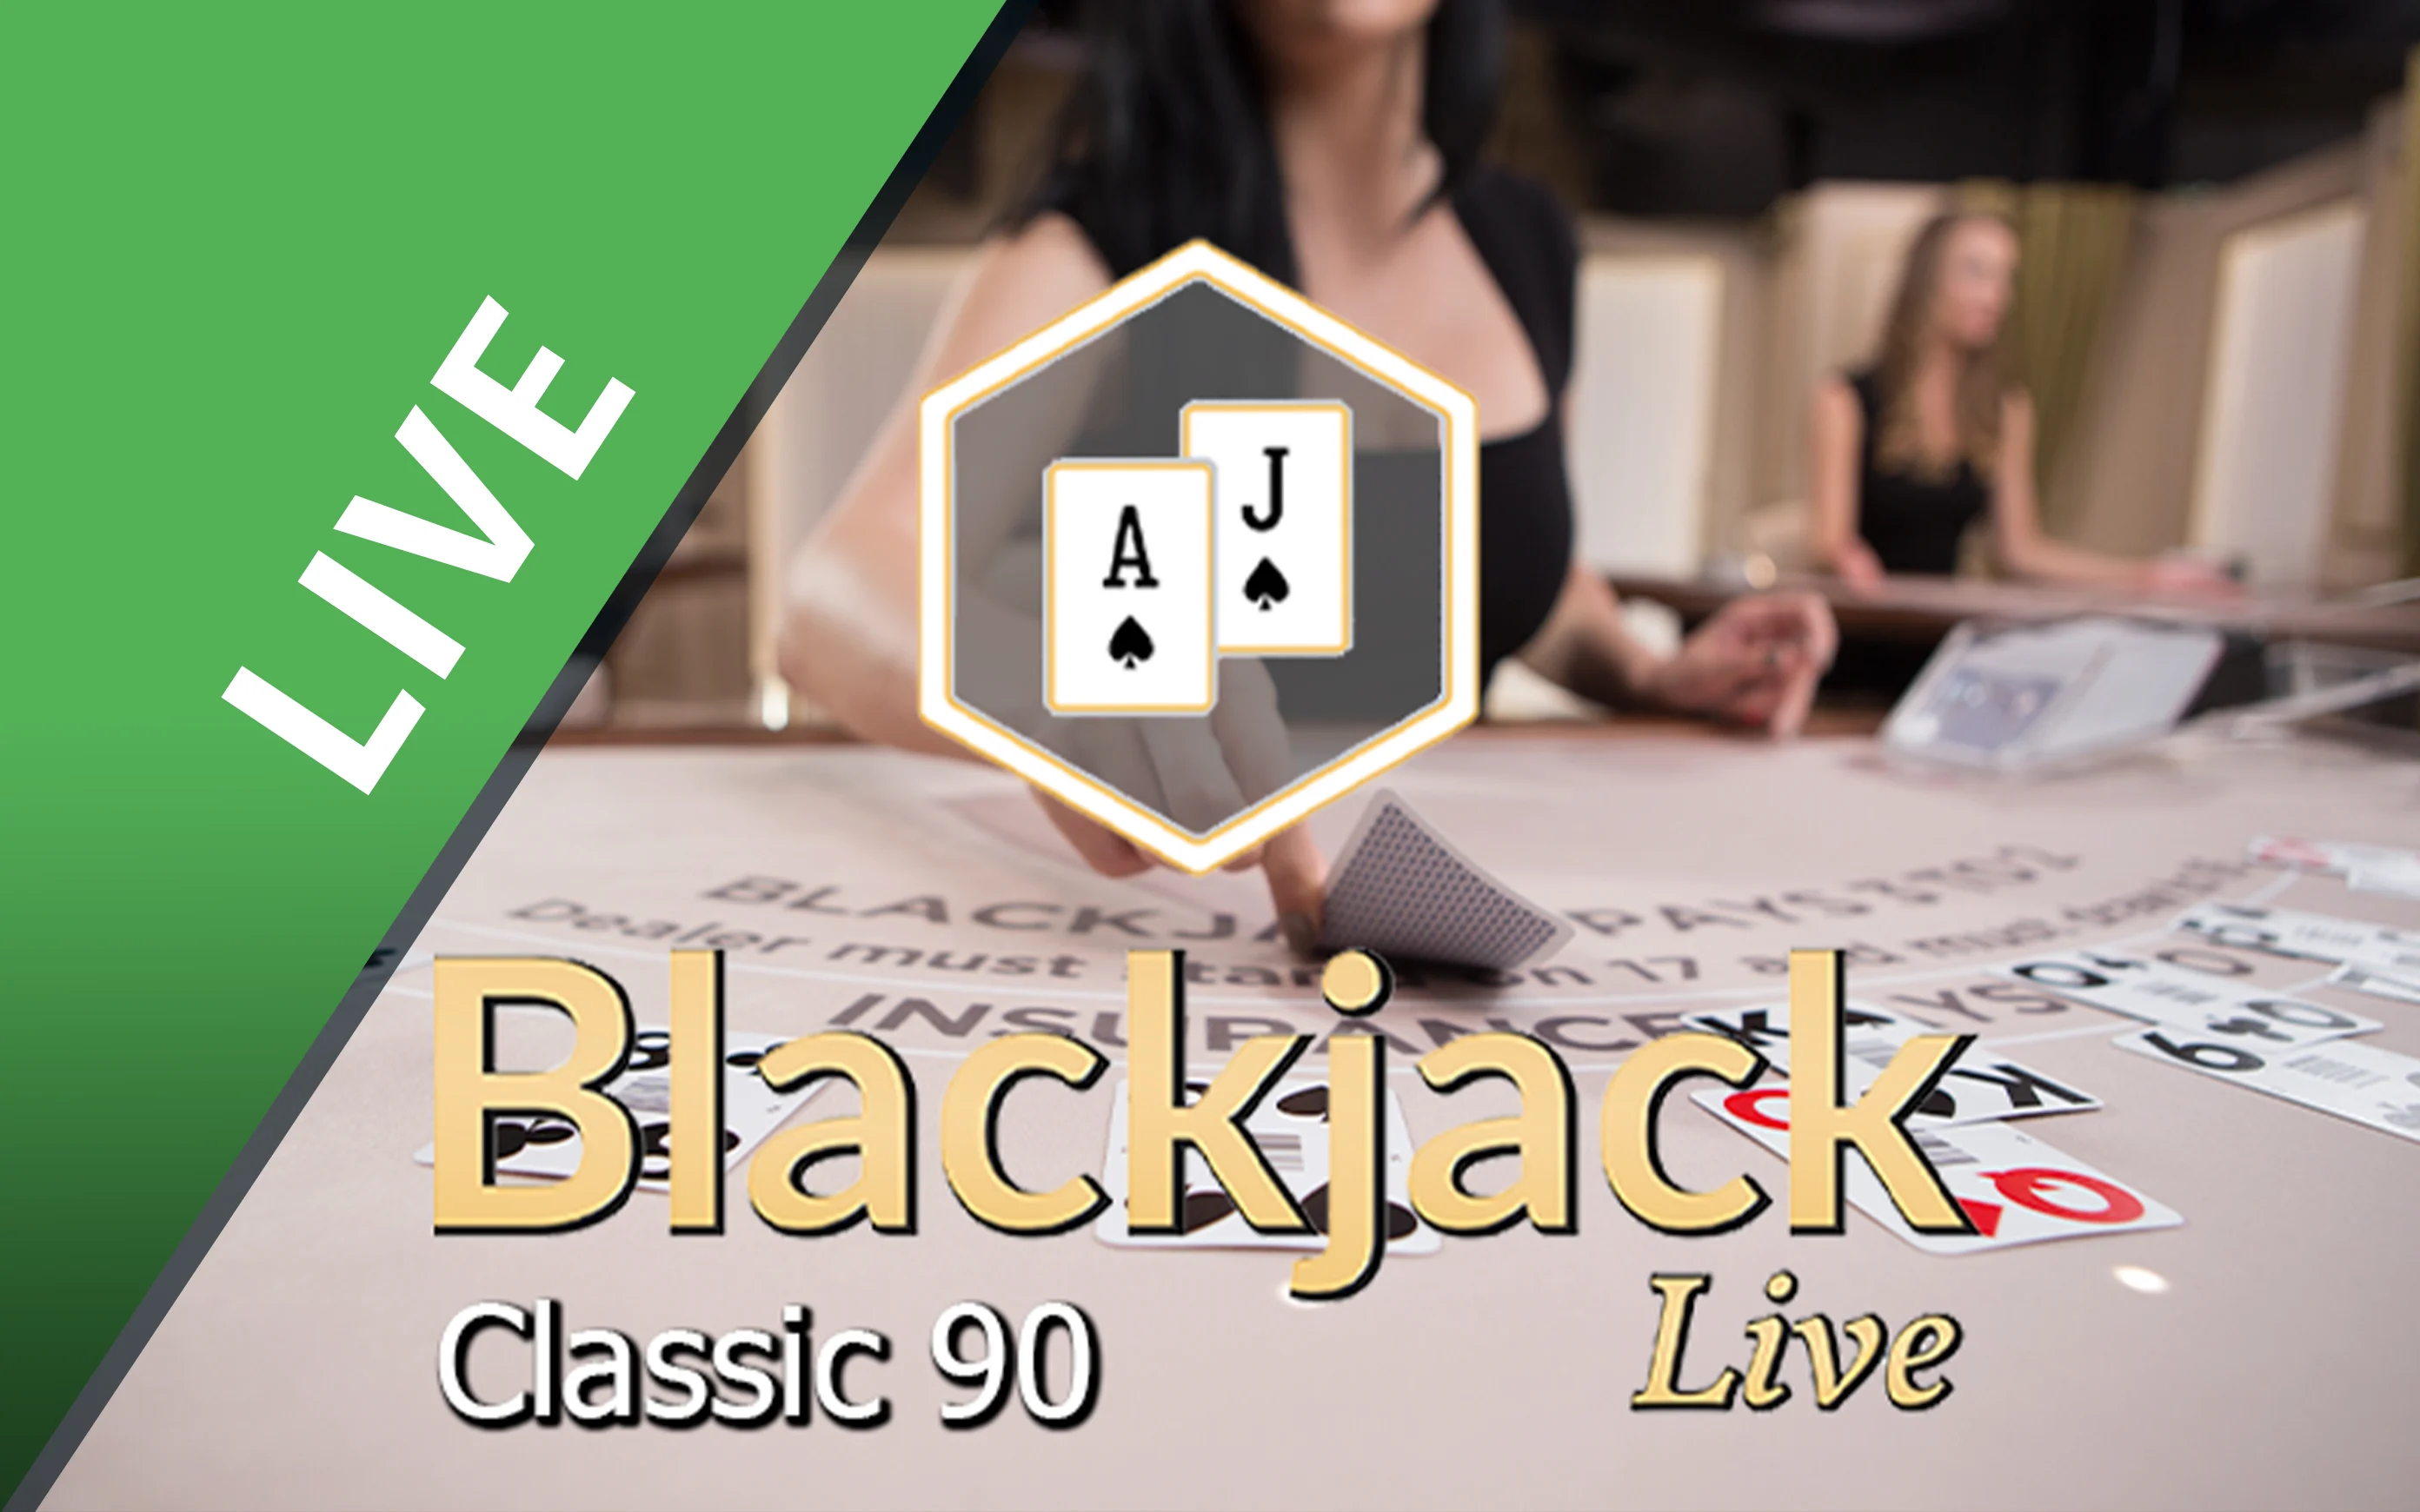 Play Blackjack Classic 90 on Starcasino.be online casino